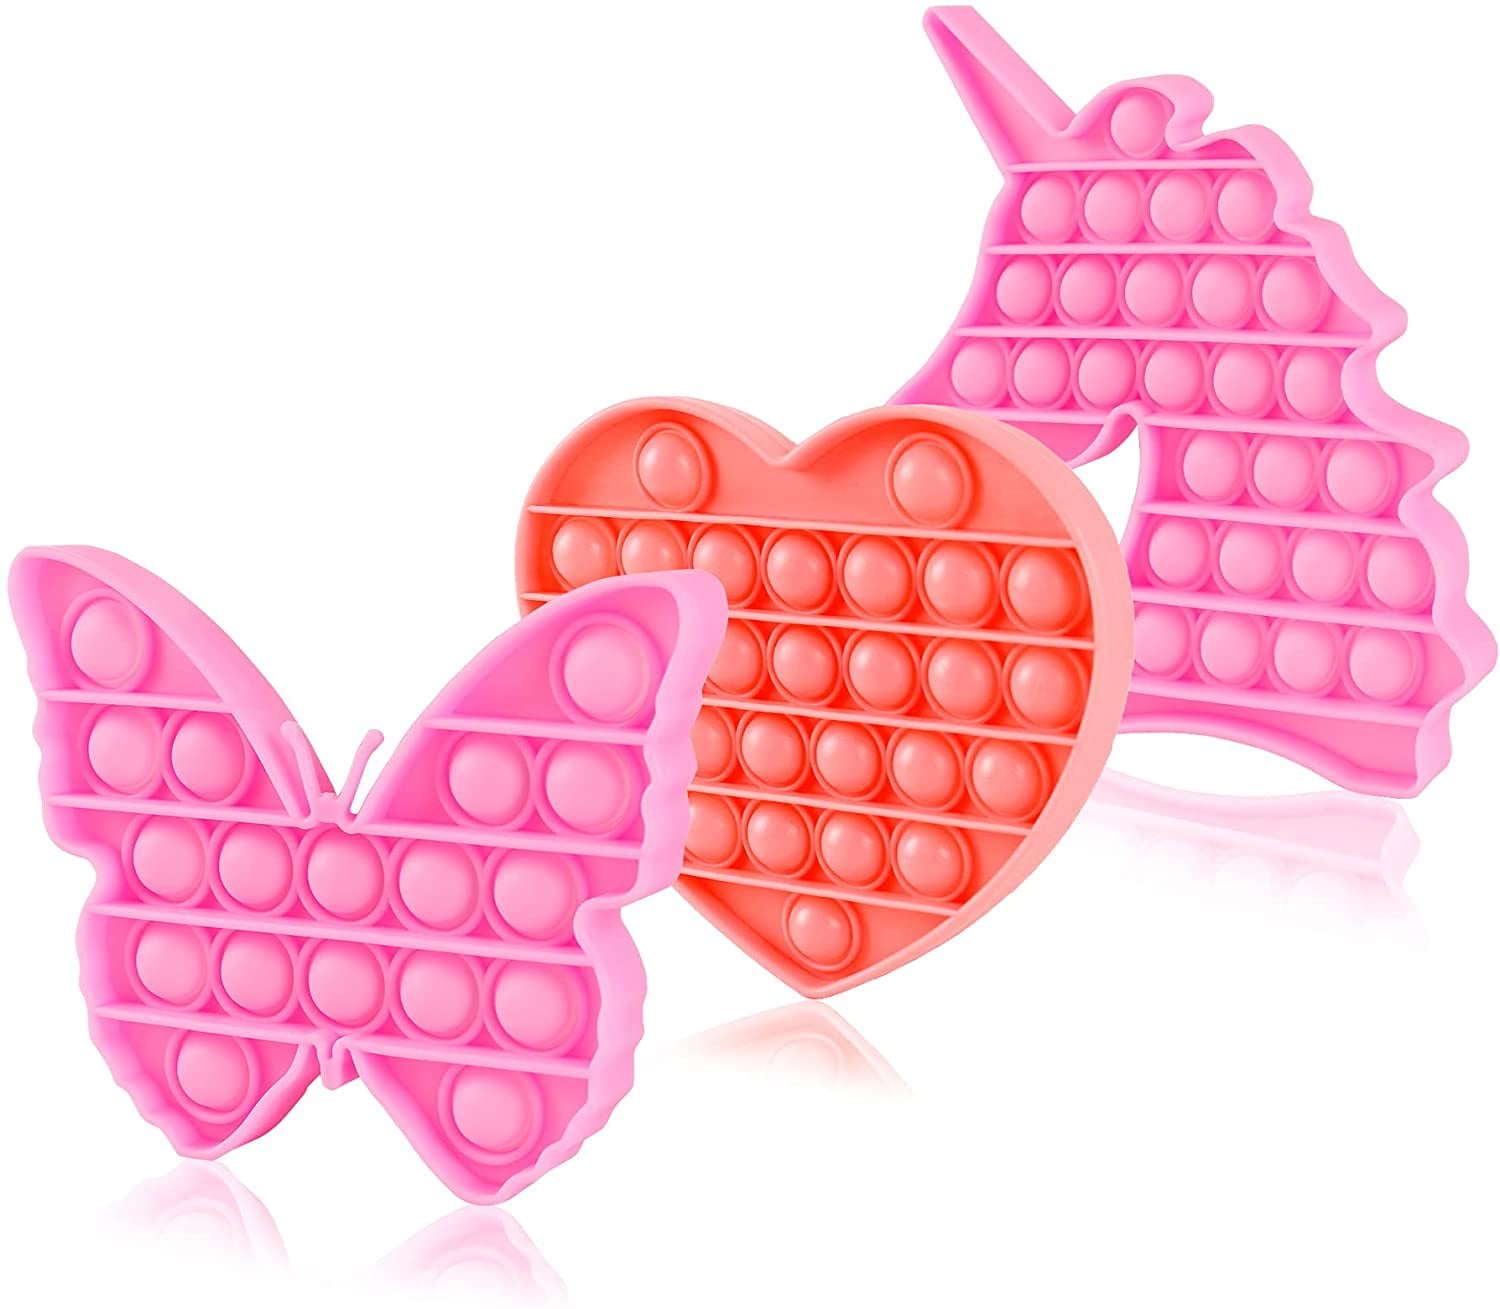 Details about   Push Pop Silicone Sensory Fidget Toy Anxiety It Stress Bubble Fidget Pink Heart 